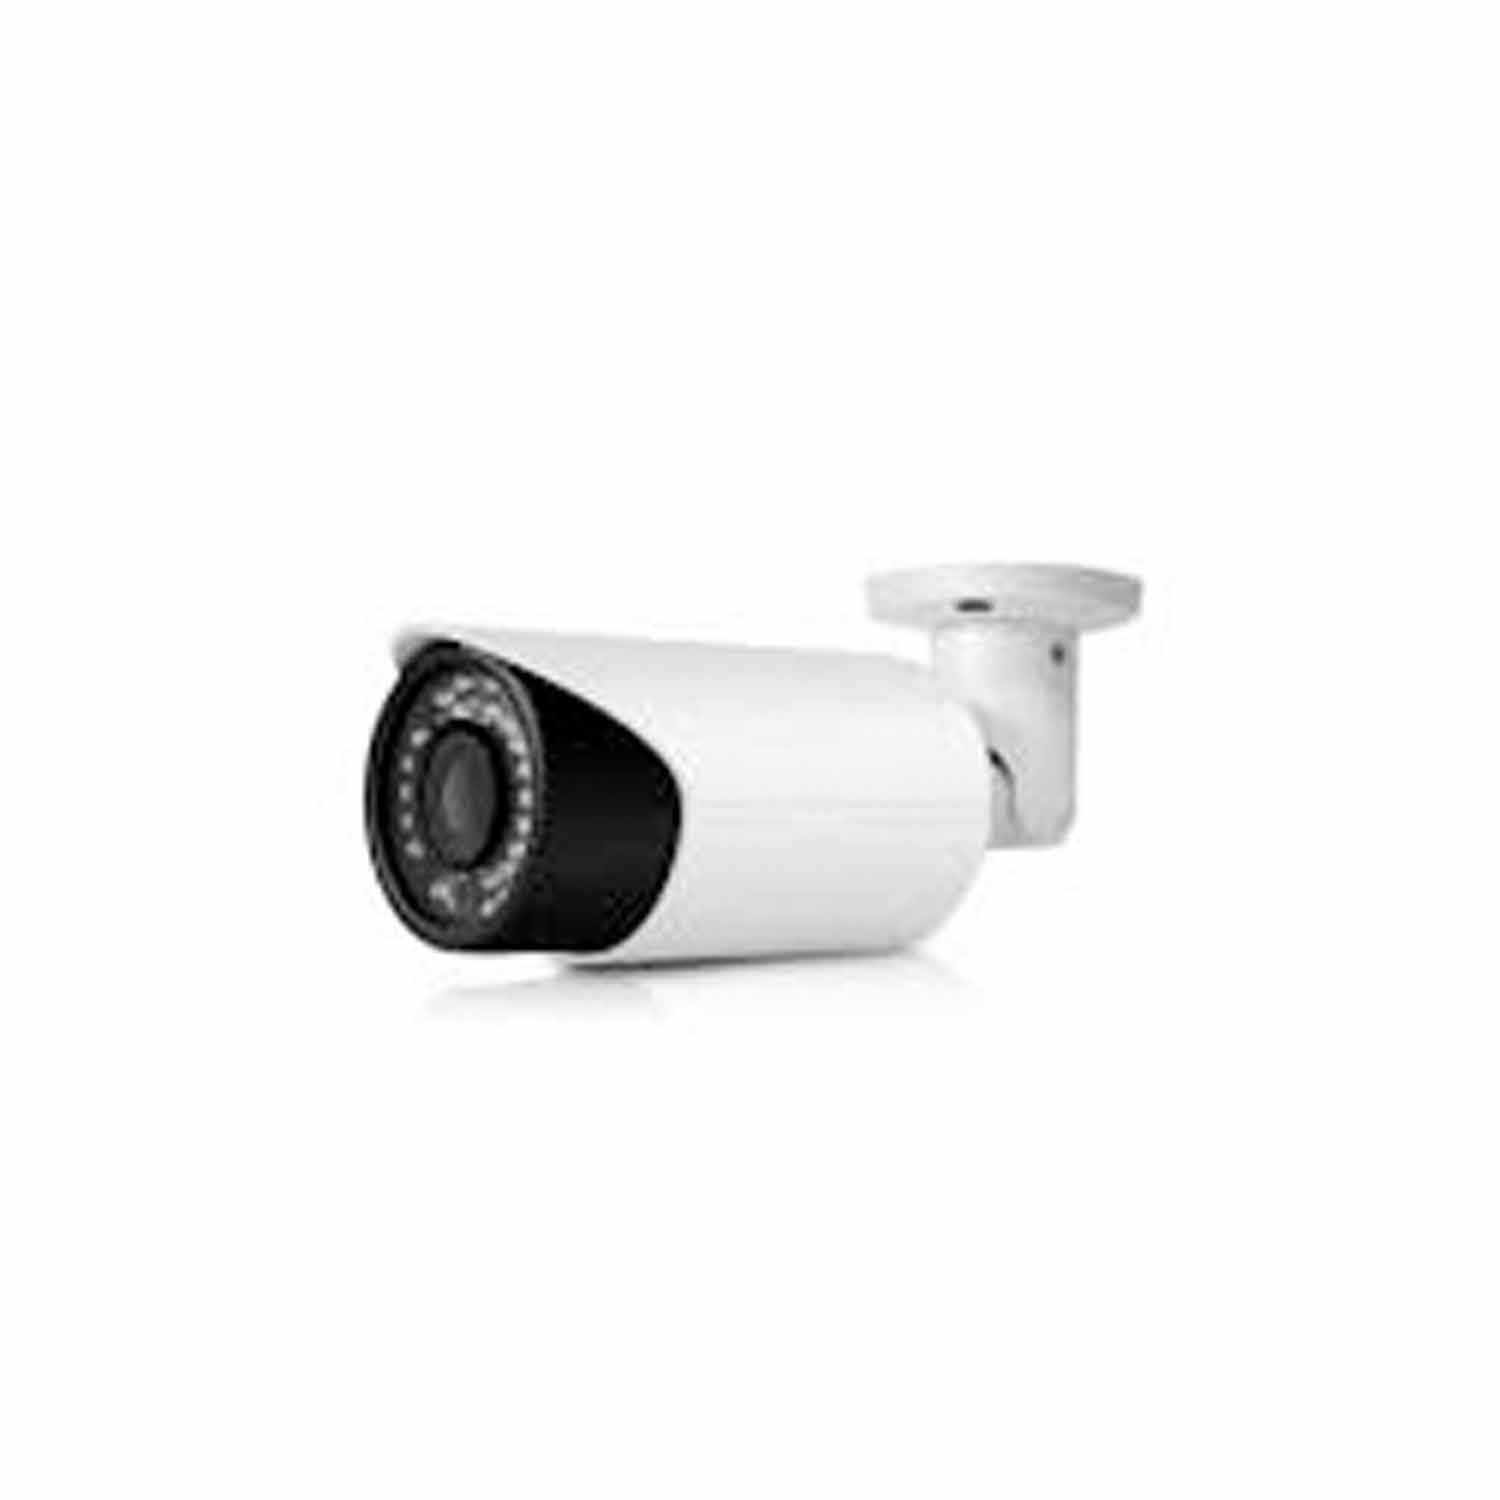 Intelligent IT&T-3324 Analog Dome Camera White